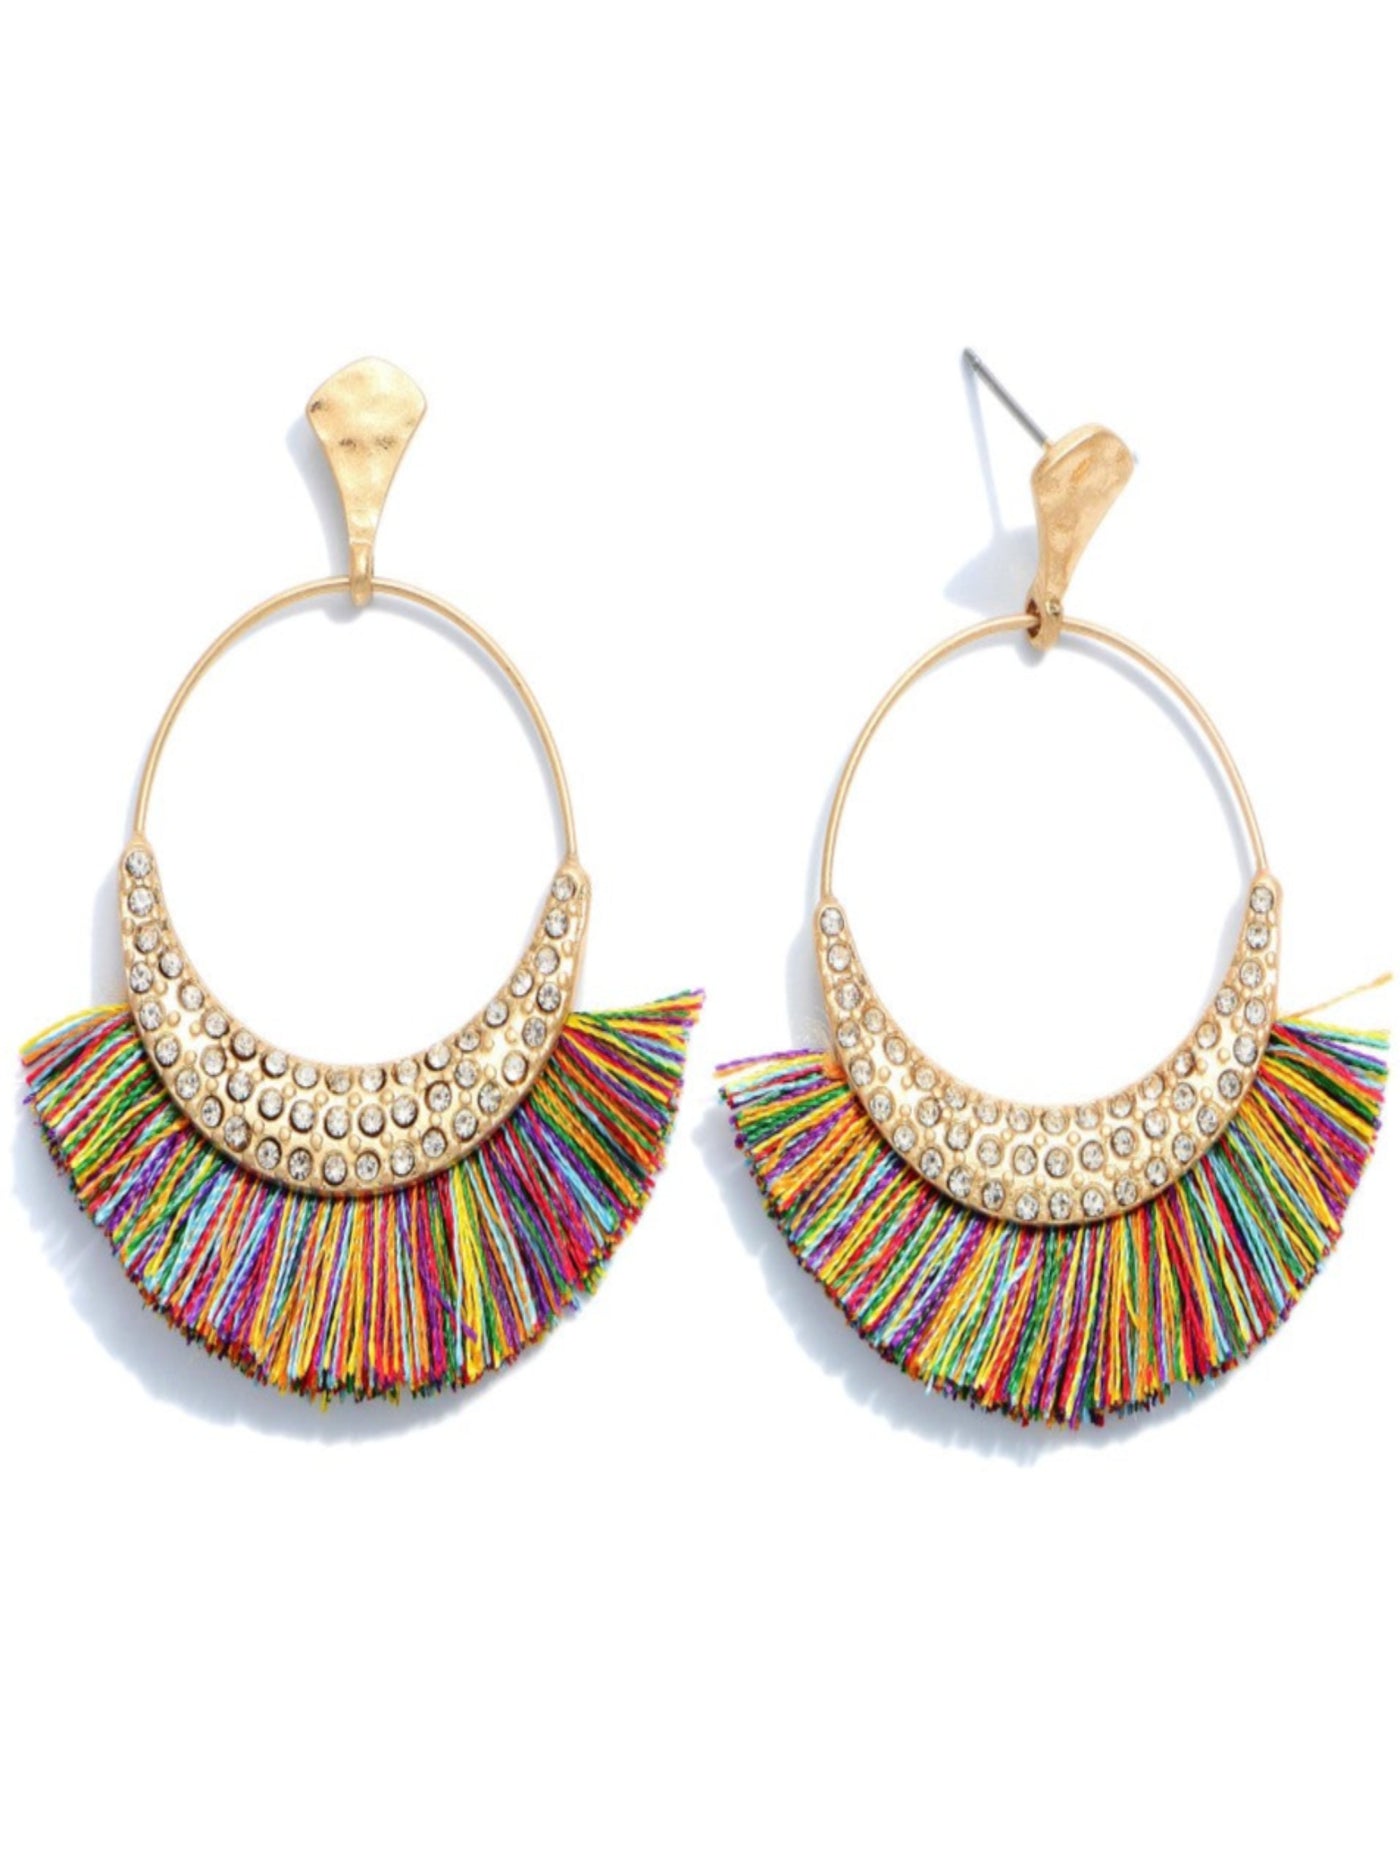 Gold Rhinestone Fringe Tassel Drop Earrings, Multi Color